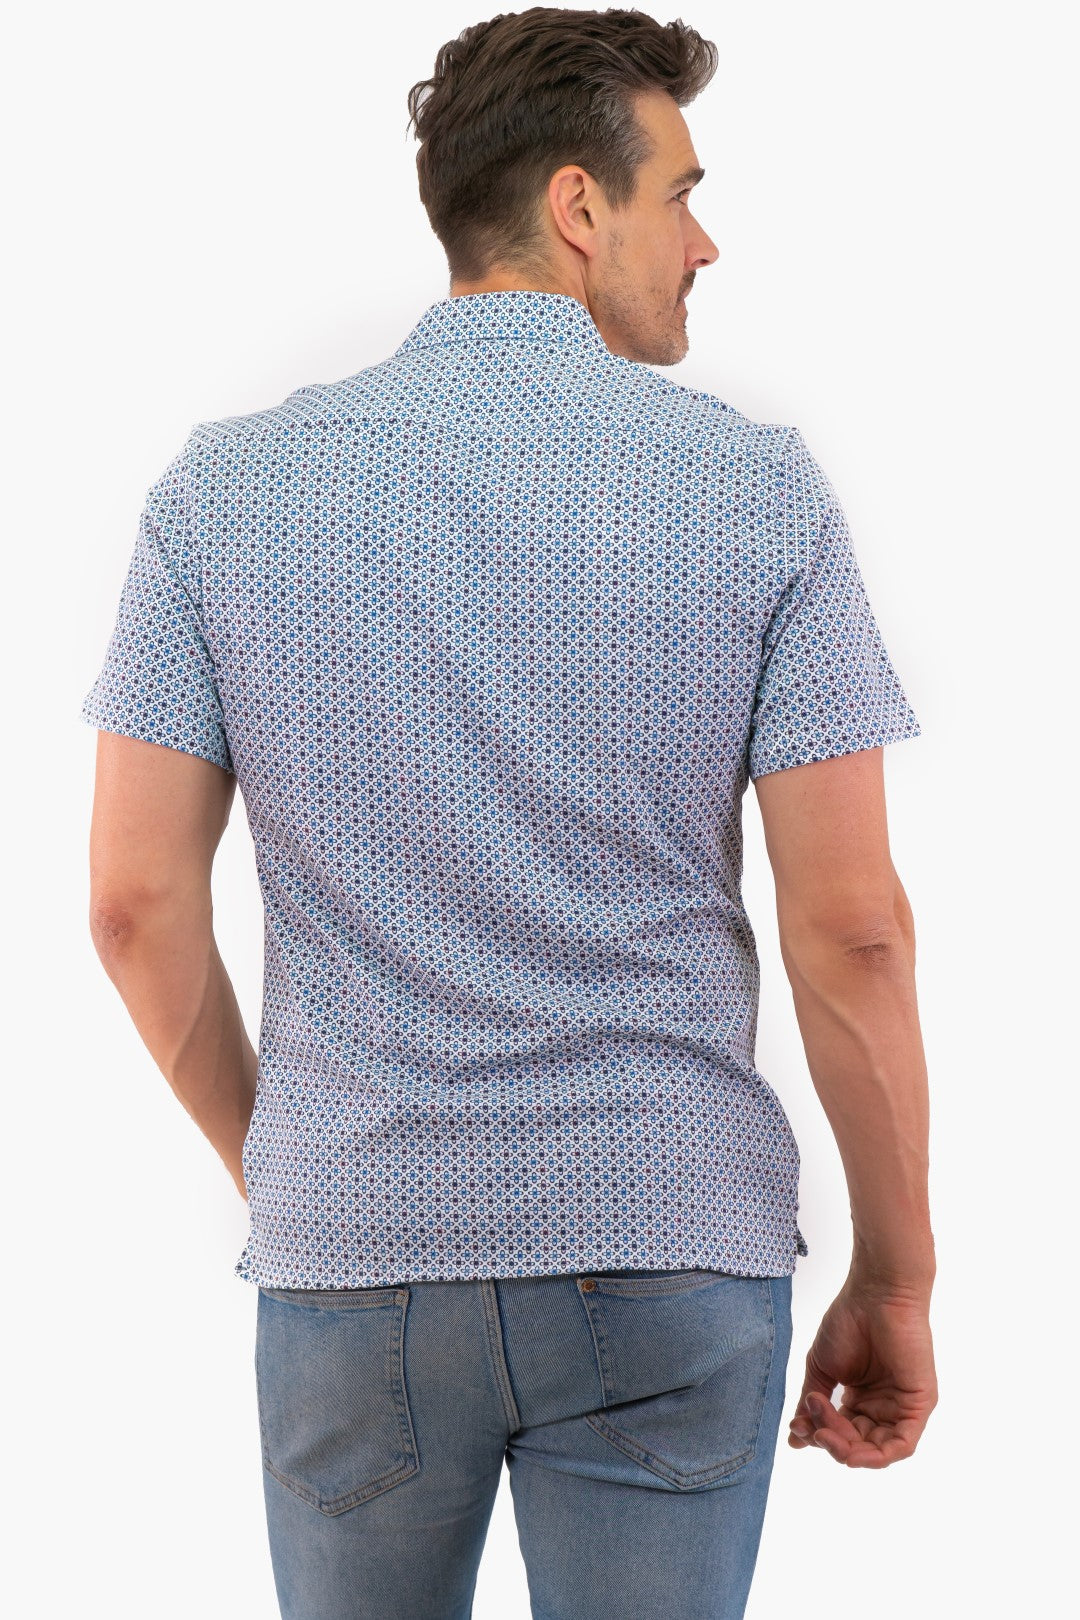 Hörst Short Sleeve Shirt in Blue color (Off-Hrss241764-400)